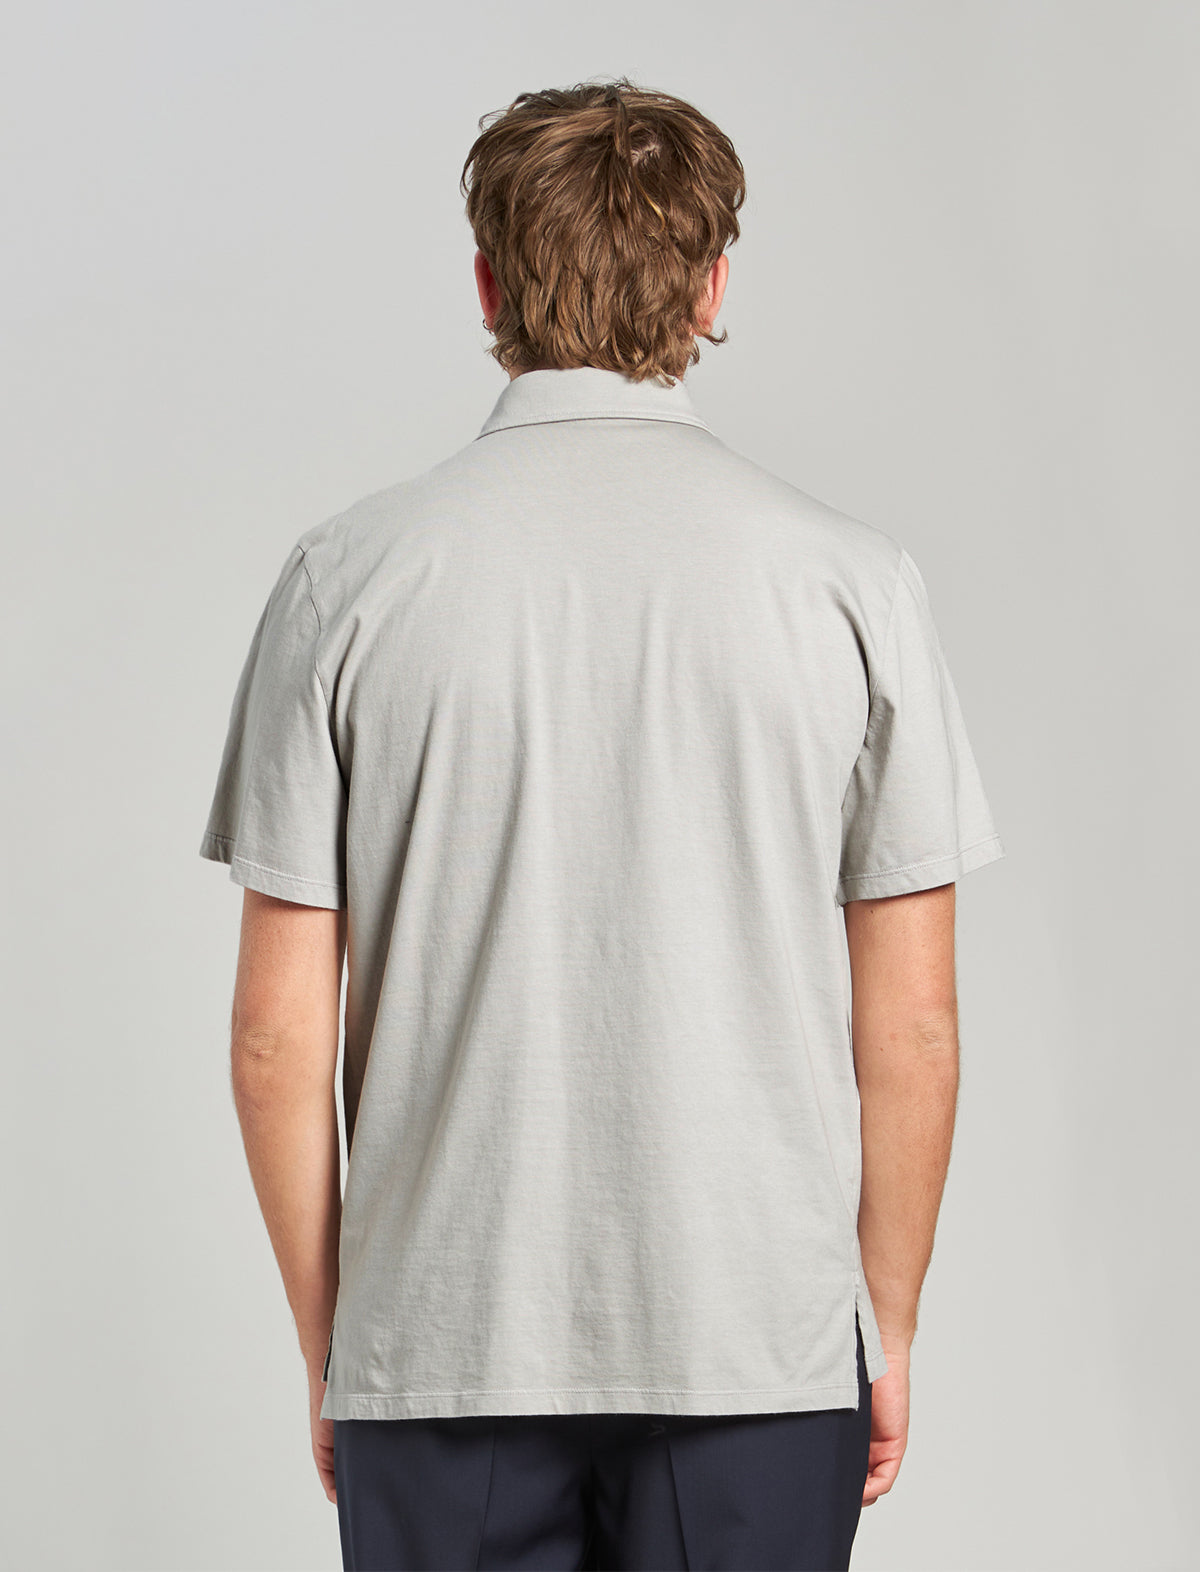 BARENA VENEZIA Cotton Jersey Polo Shirt in Pearl Grey